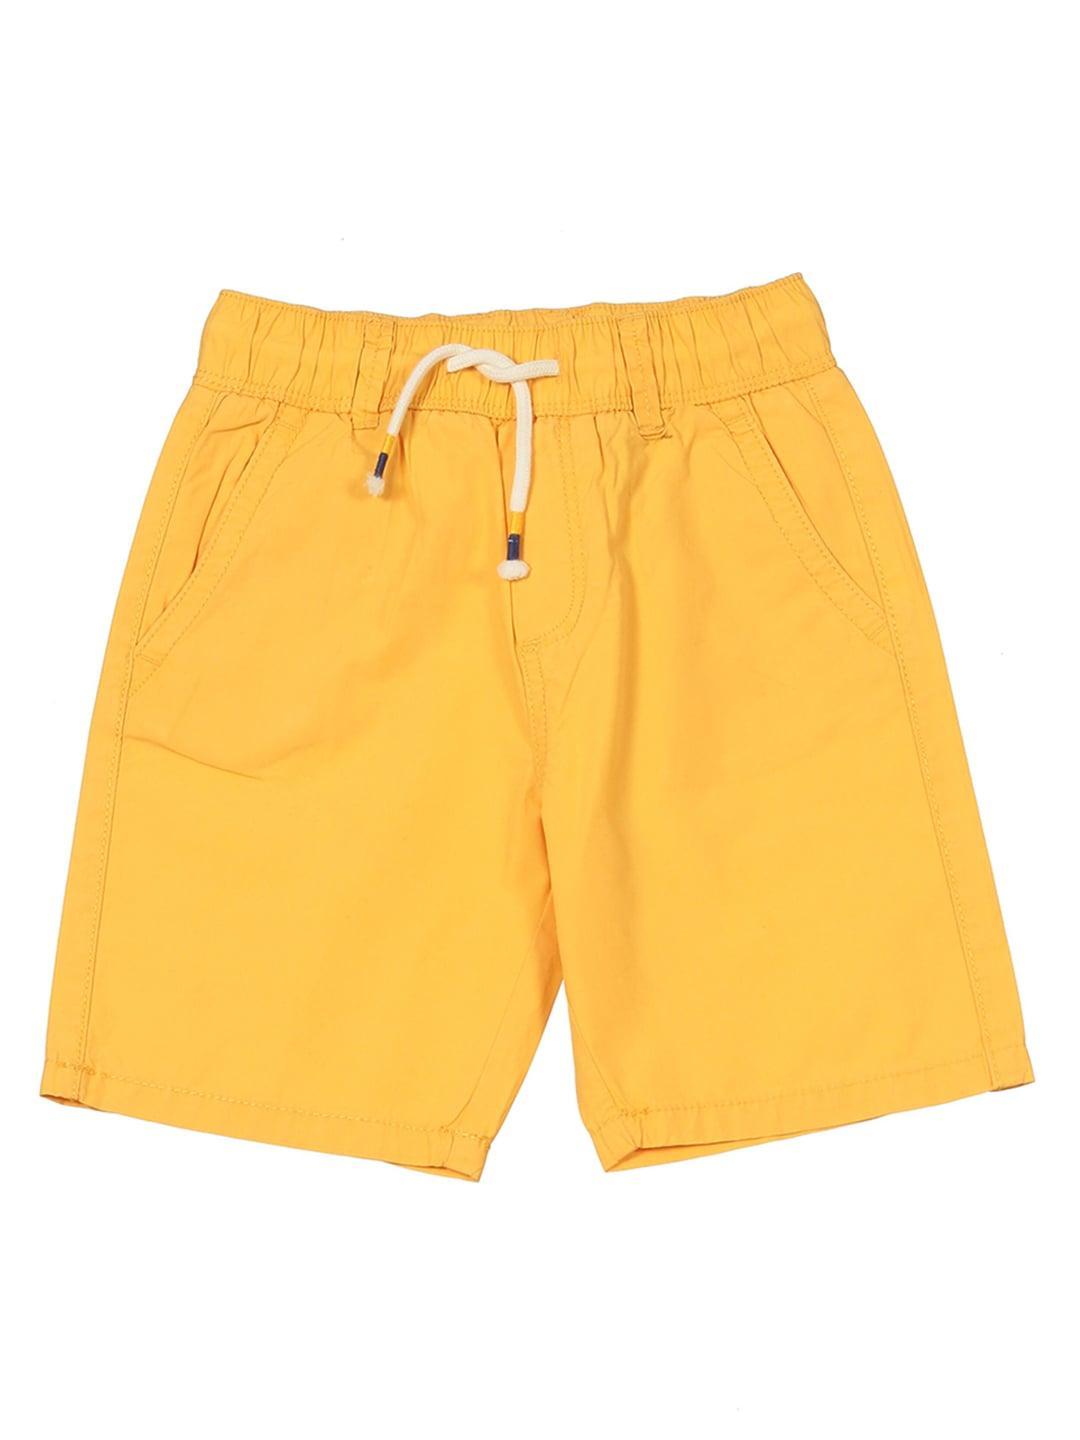 lil-lollipop-boys-yellow-outdoor-shorts